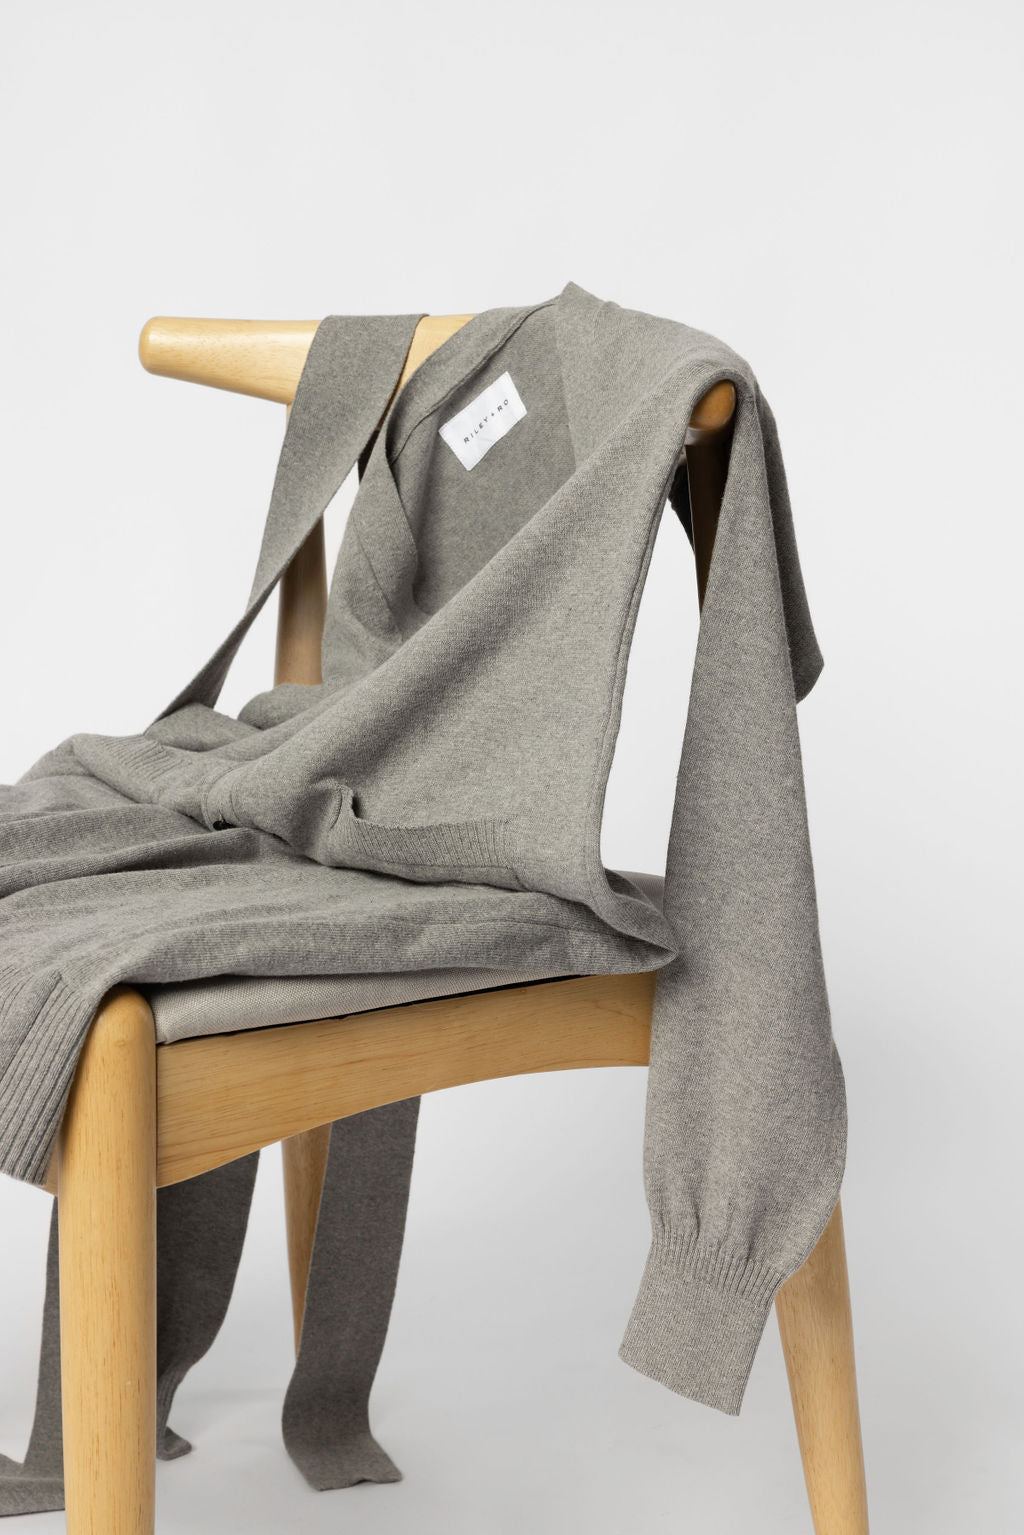 Minimalist Capsule Wardrobe 100% Organic Cotton Gray Cardigan Sweater Dress